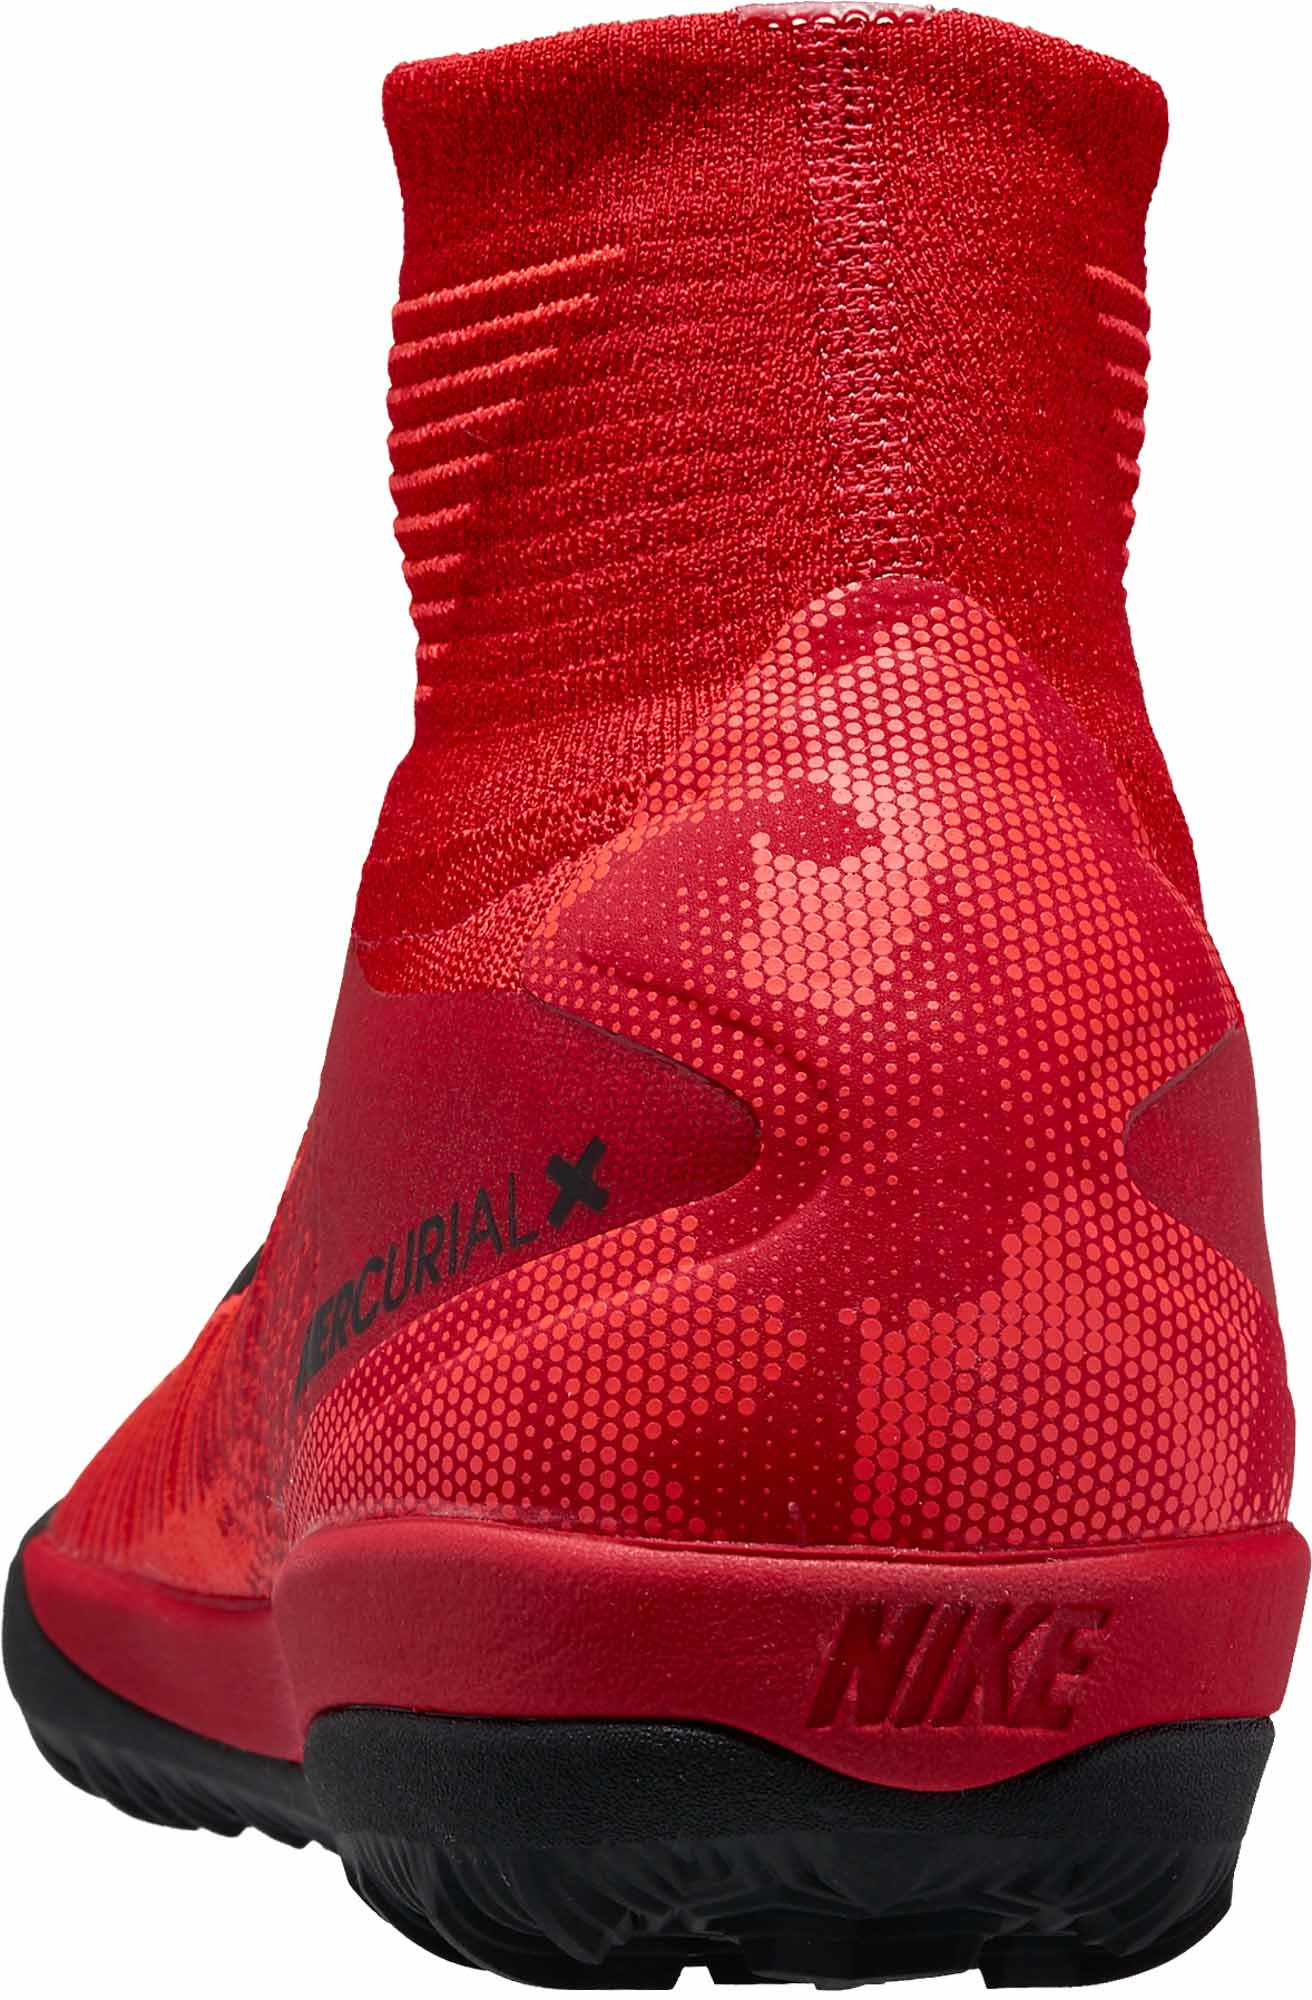 Confinar fuego Capitán Brie Nike MercurialX Proximo II TF - University Red & Black - Soccer Master